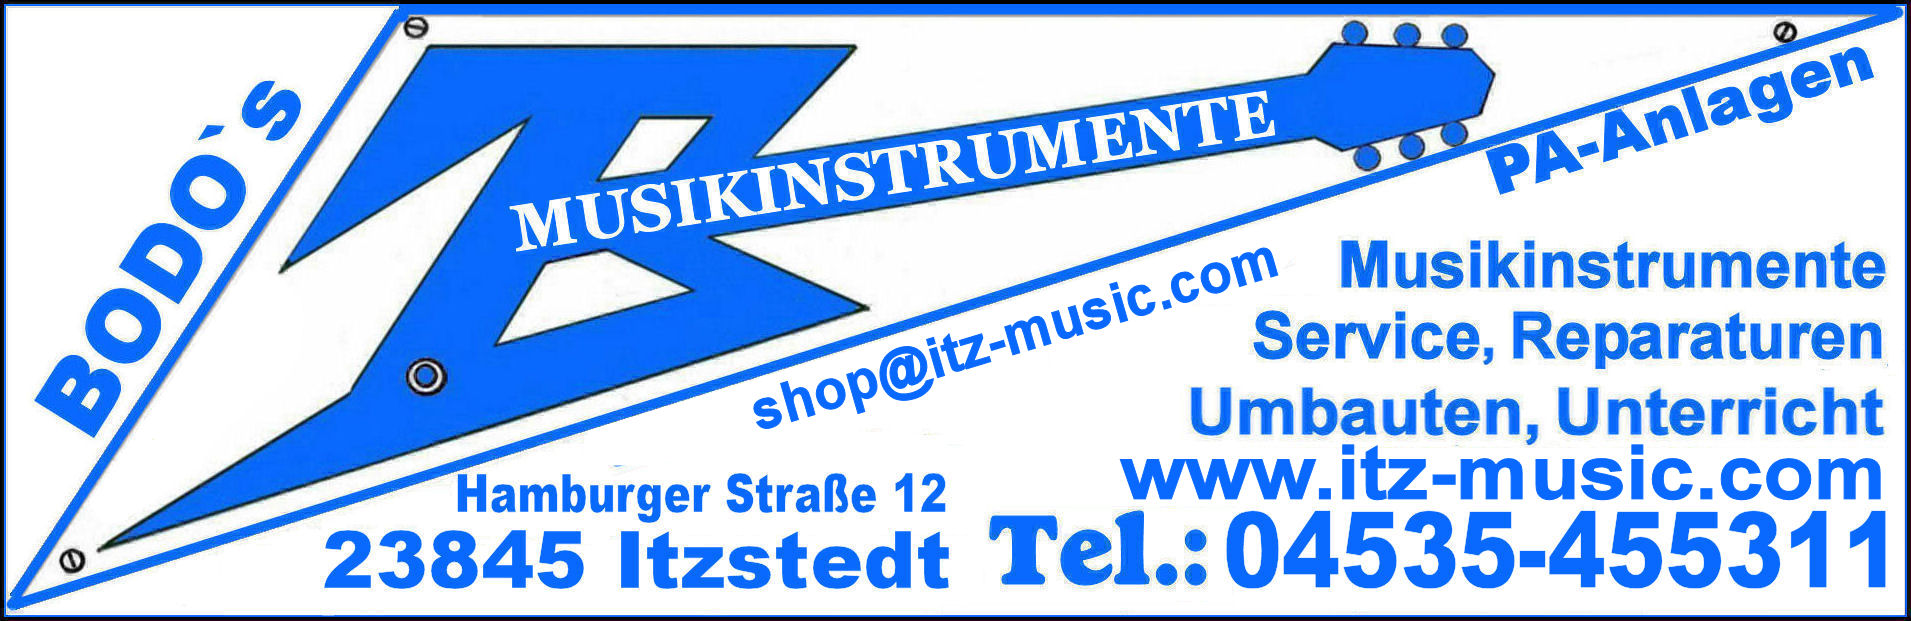 BASSEMBLEM blau Itz-music